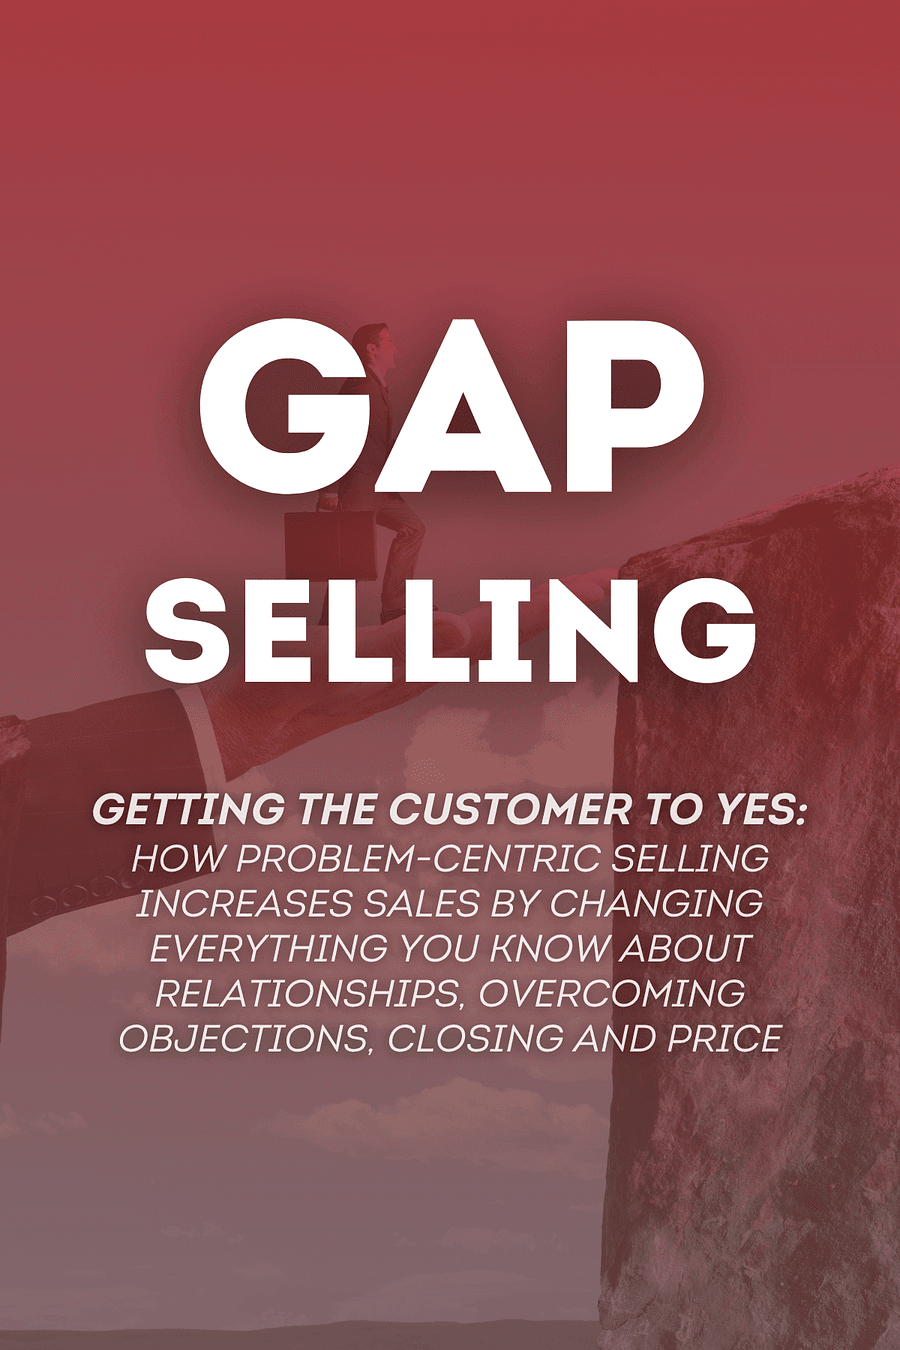 Gap Selling by Keenan - Book Summary